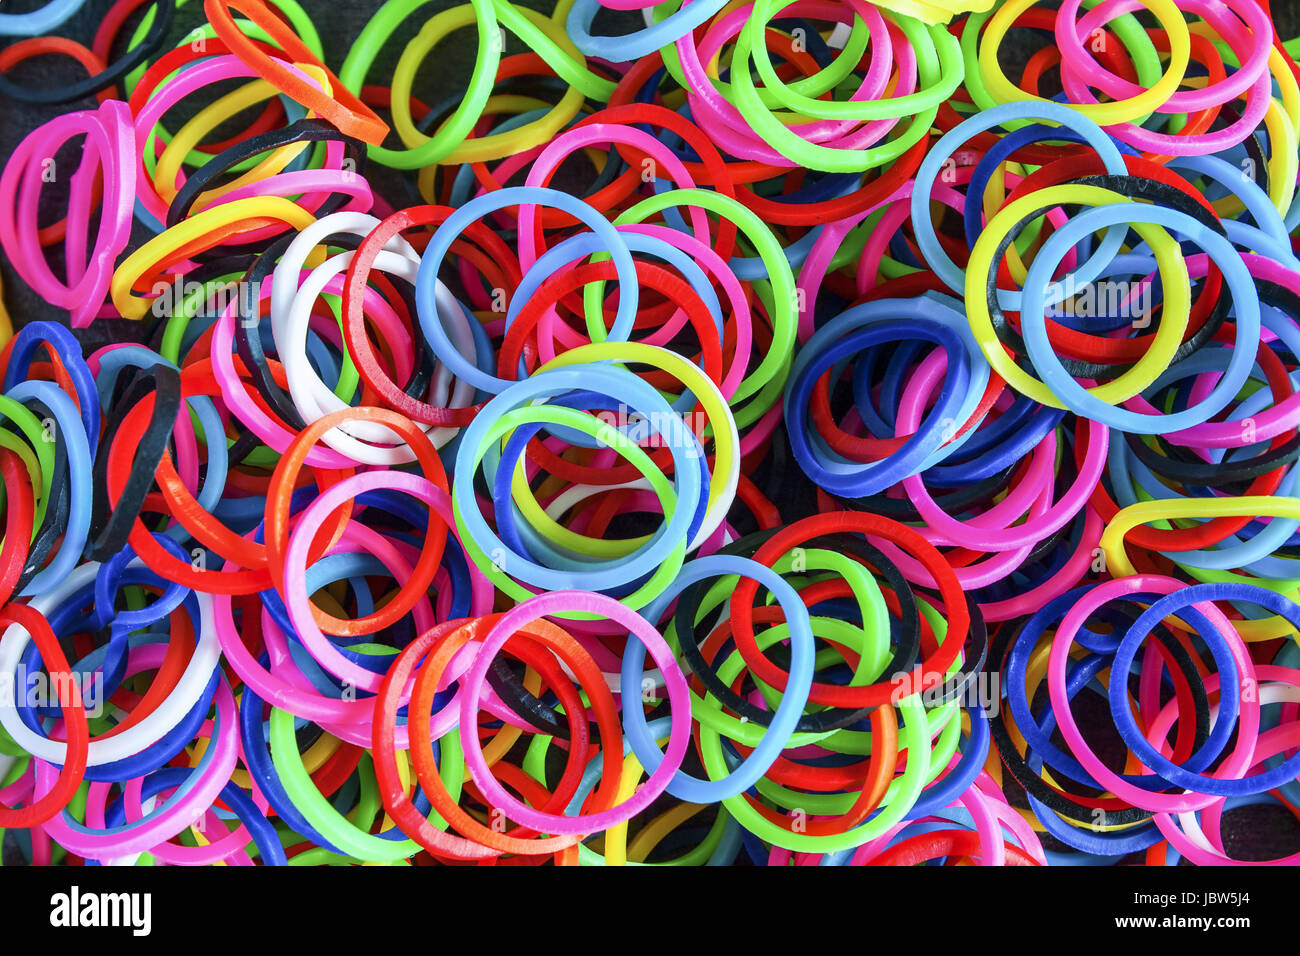 Colorful rainbow loom bracelet rubber bands Stock Photo - Alamy